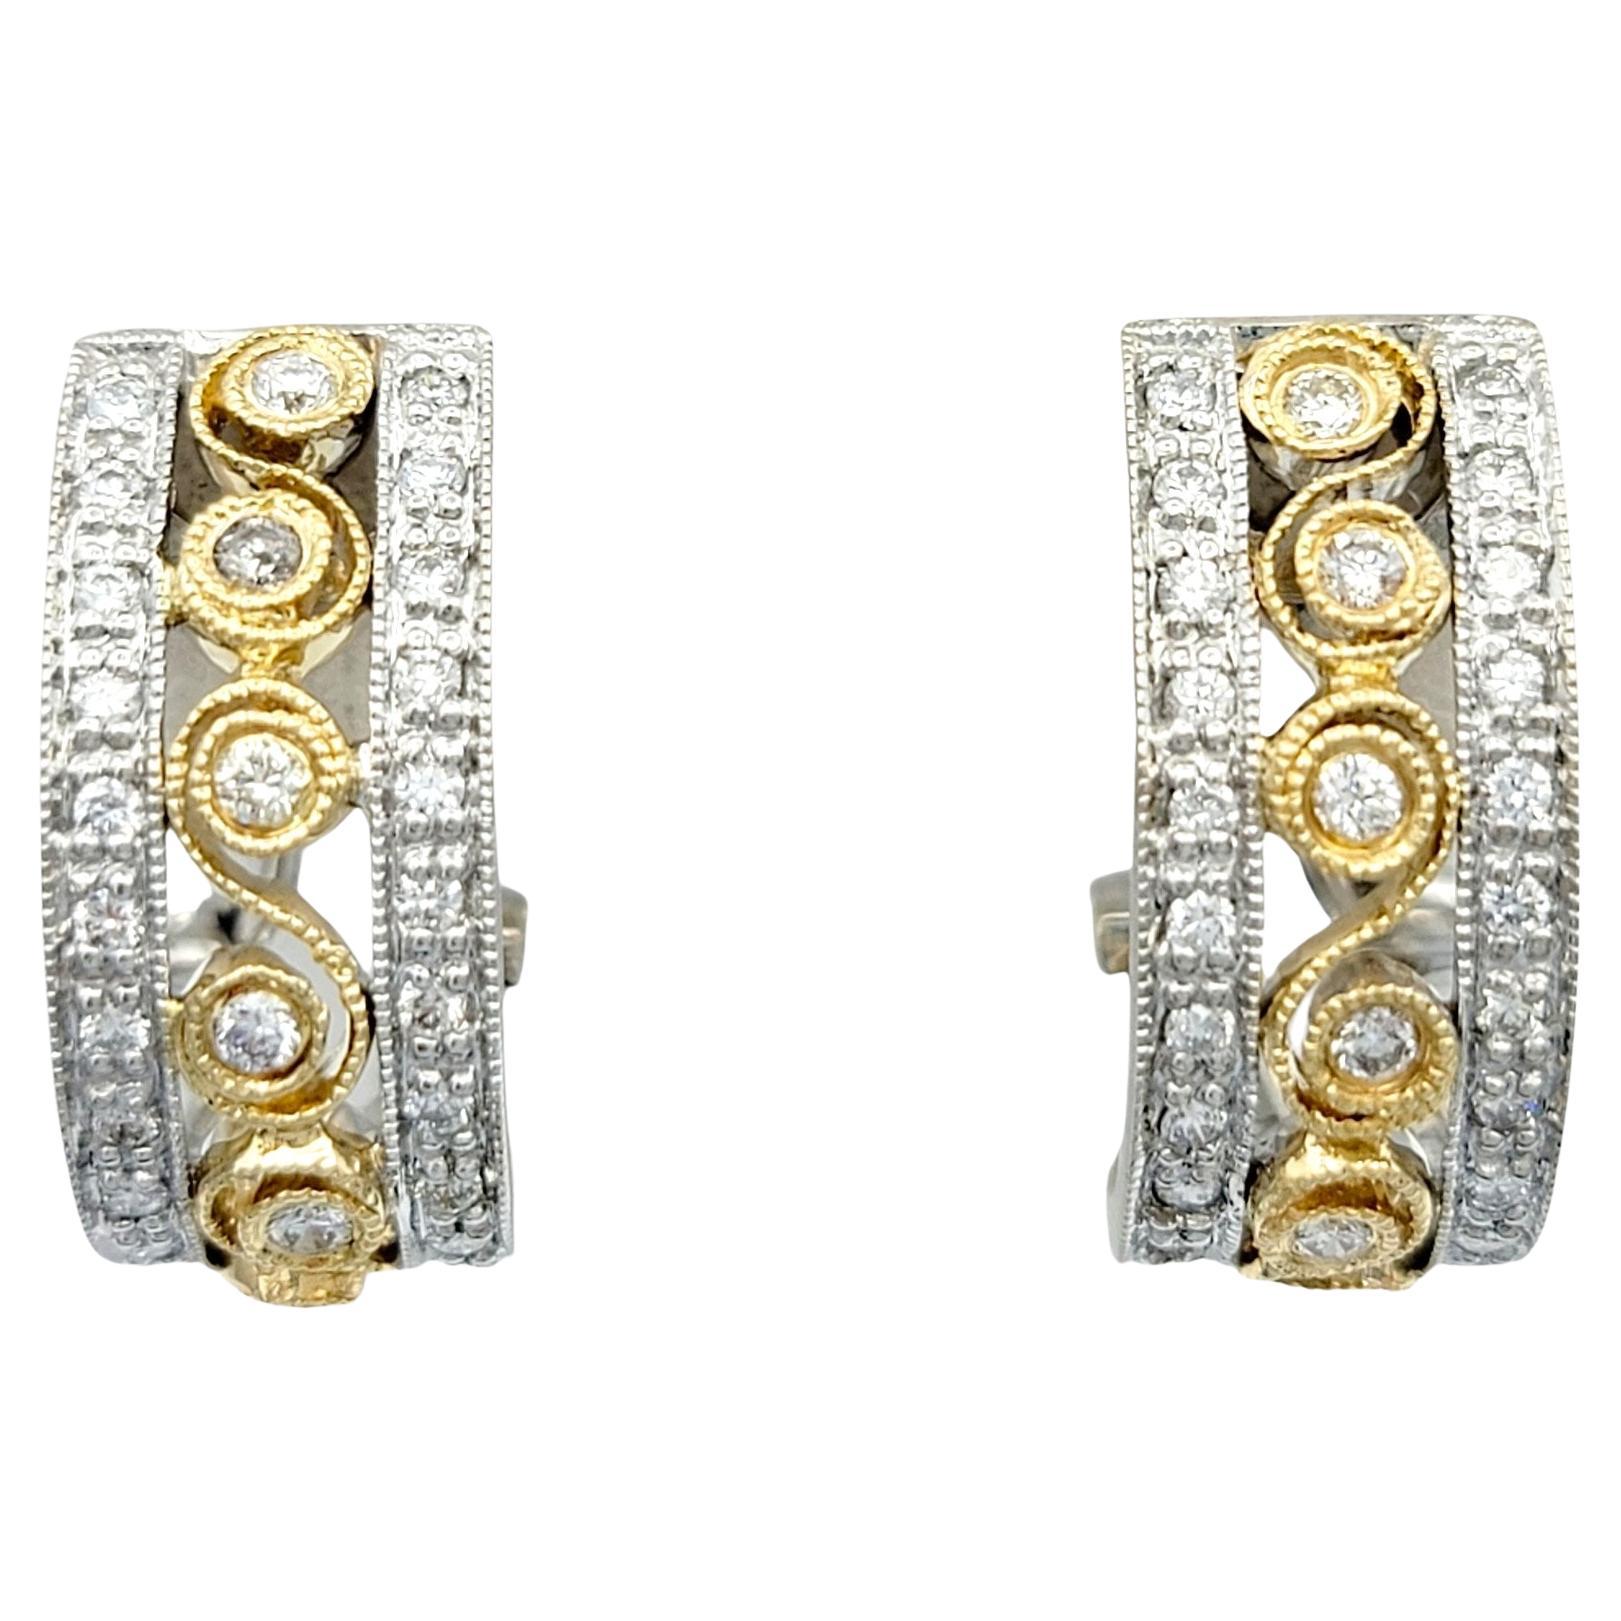 Round Diamond Scroll Design J-Hoop Earrings in 14 Karat White and Yellow Gold